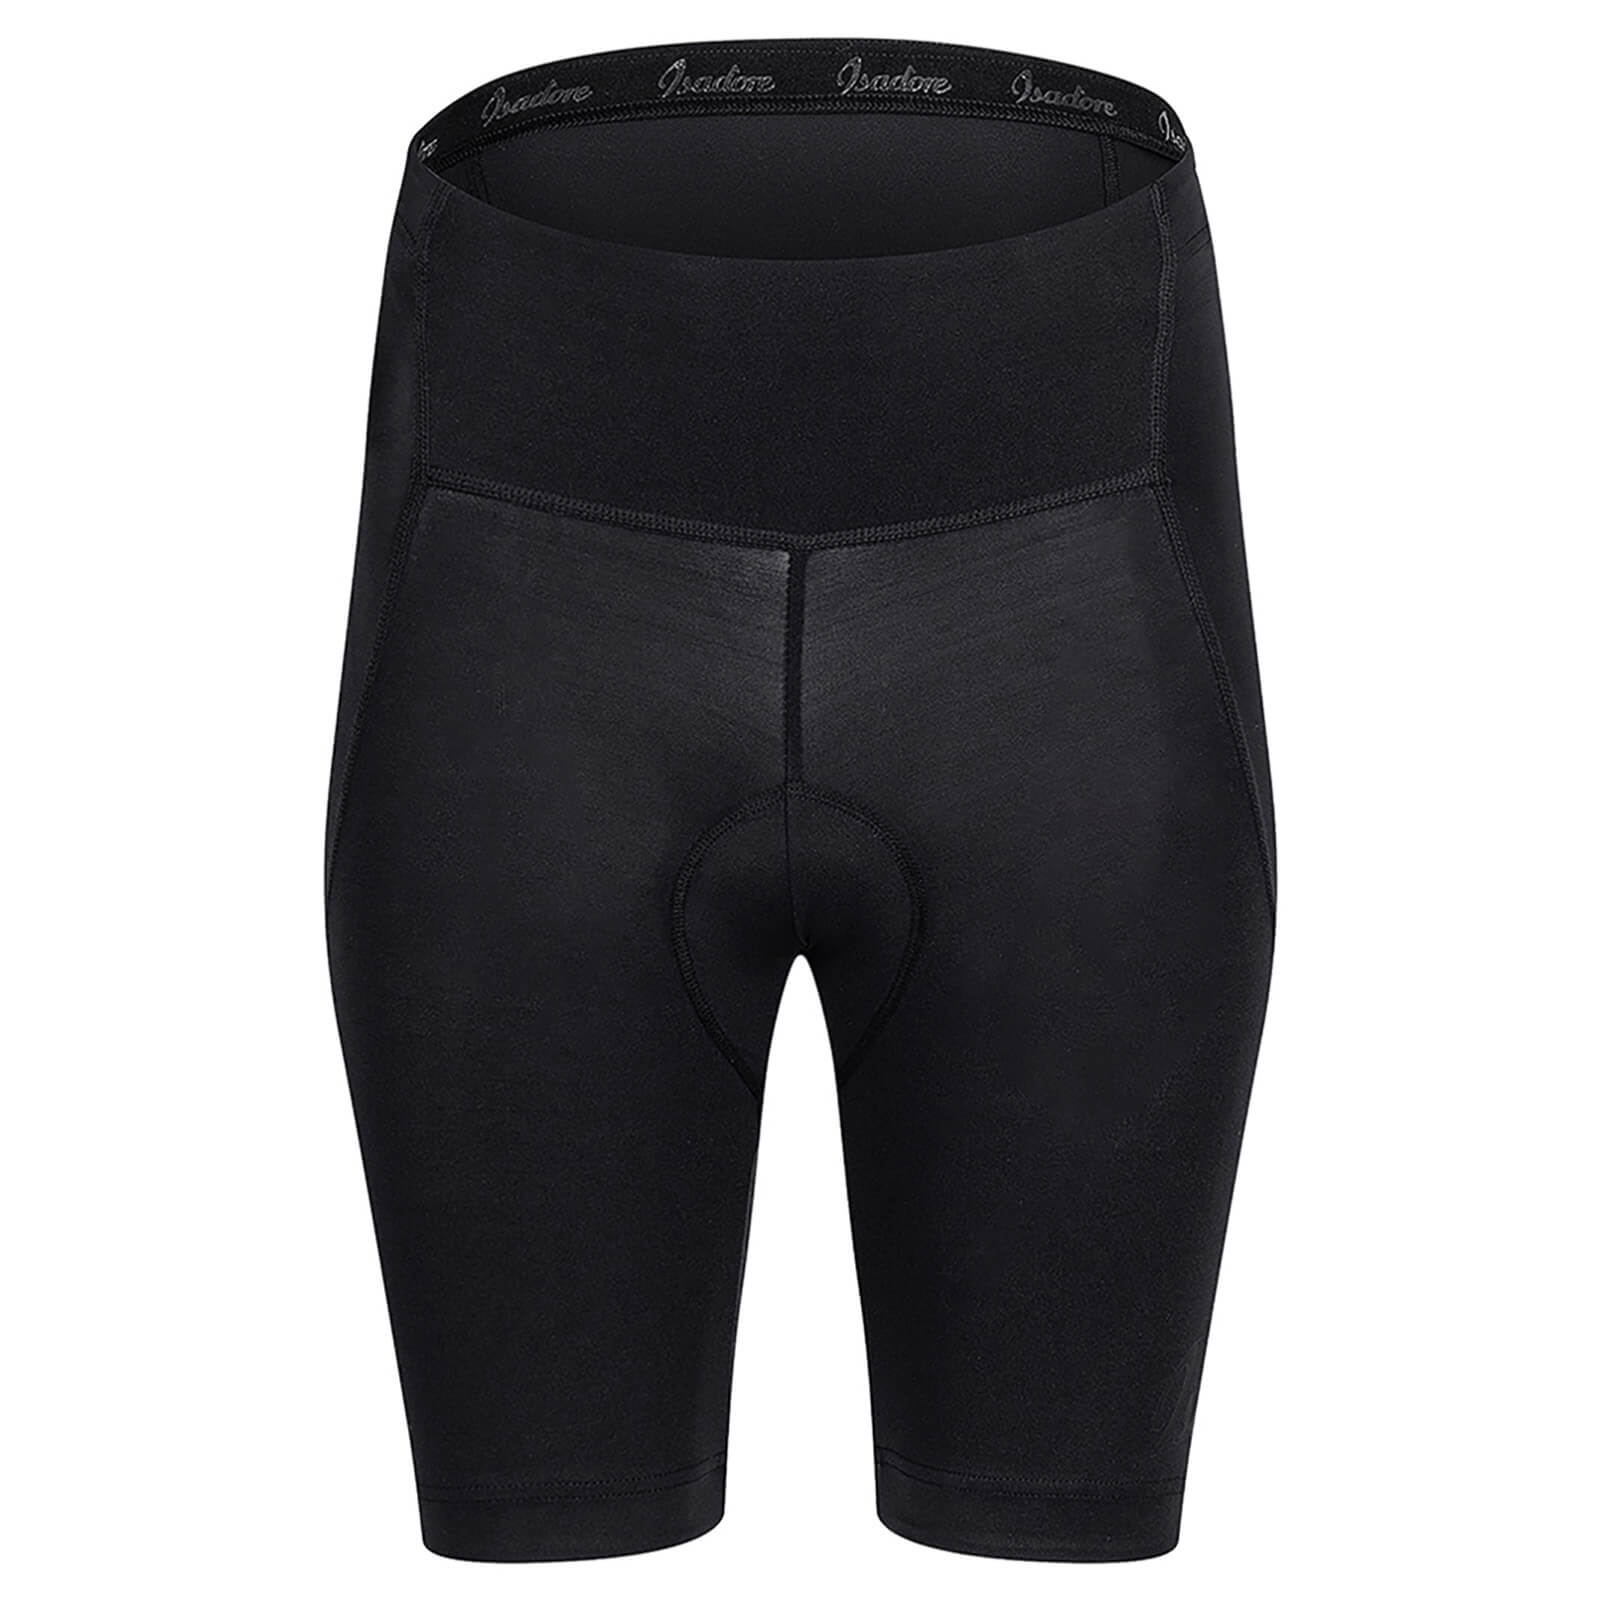 Isadore Debut Women's Bib Shorts - L - Black